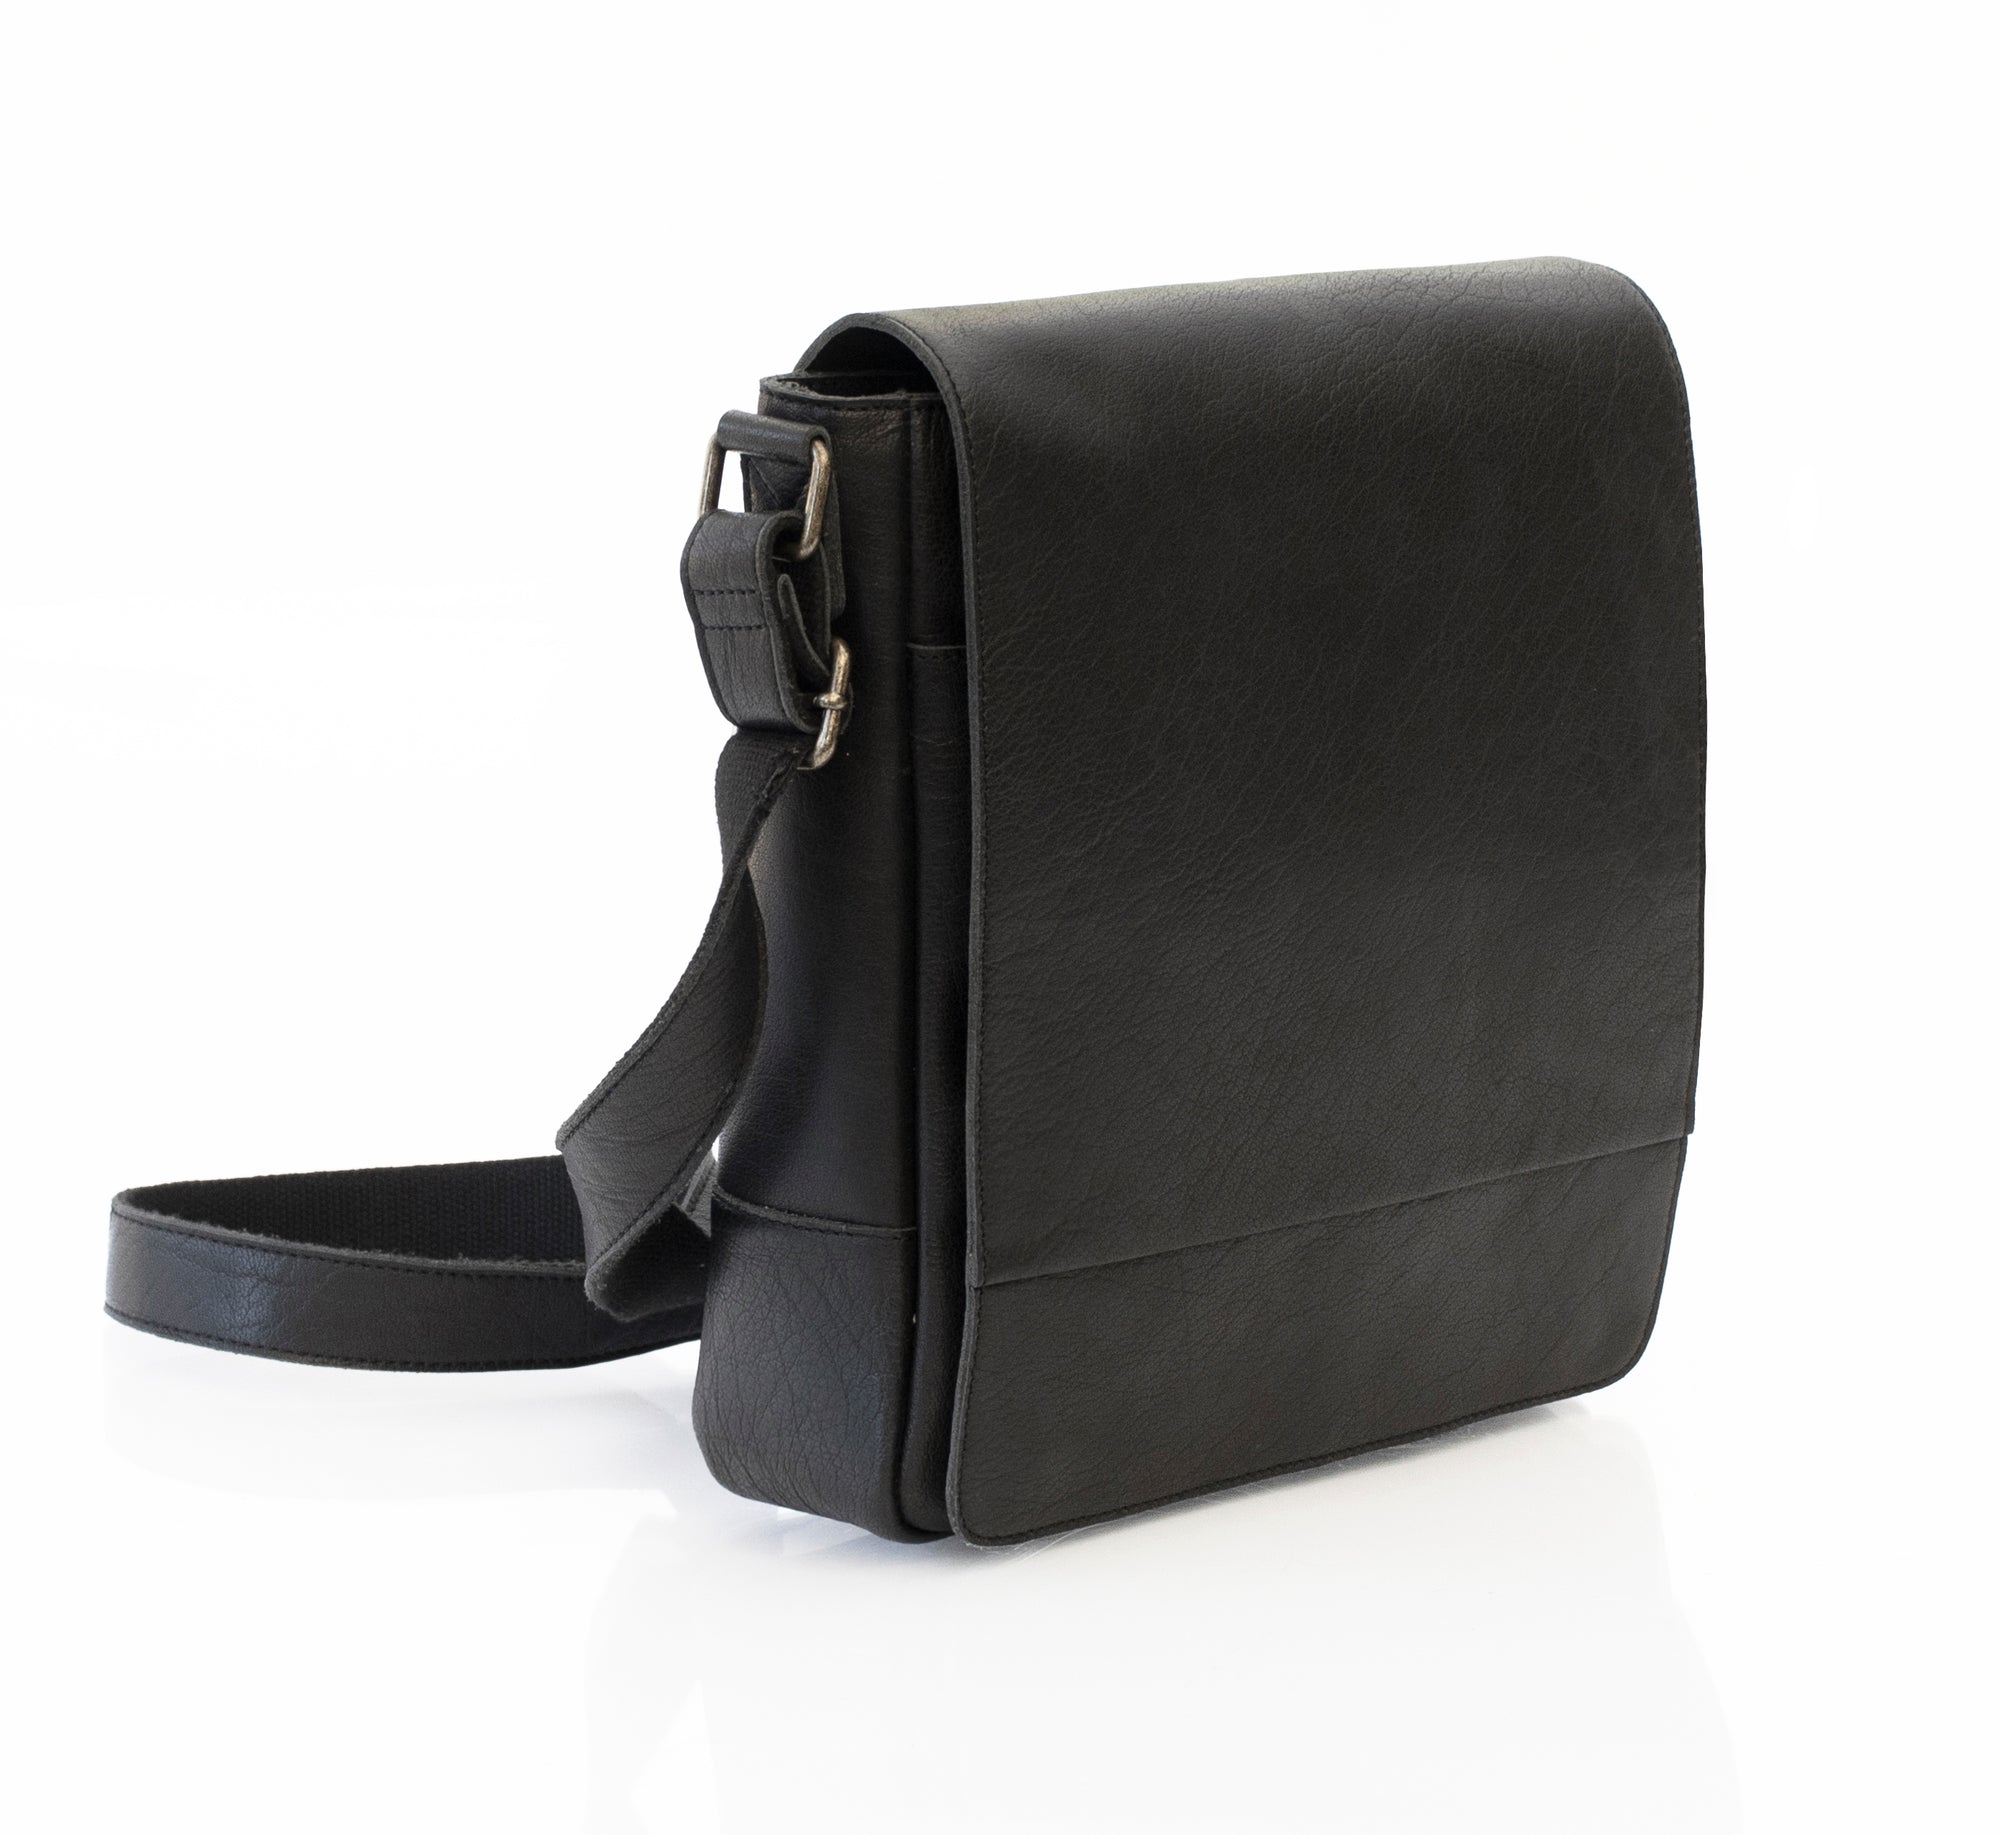 Rica Small Black Leather Messenger Bag - 1565